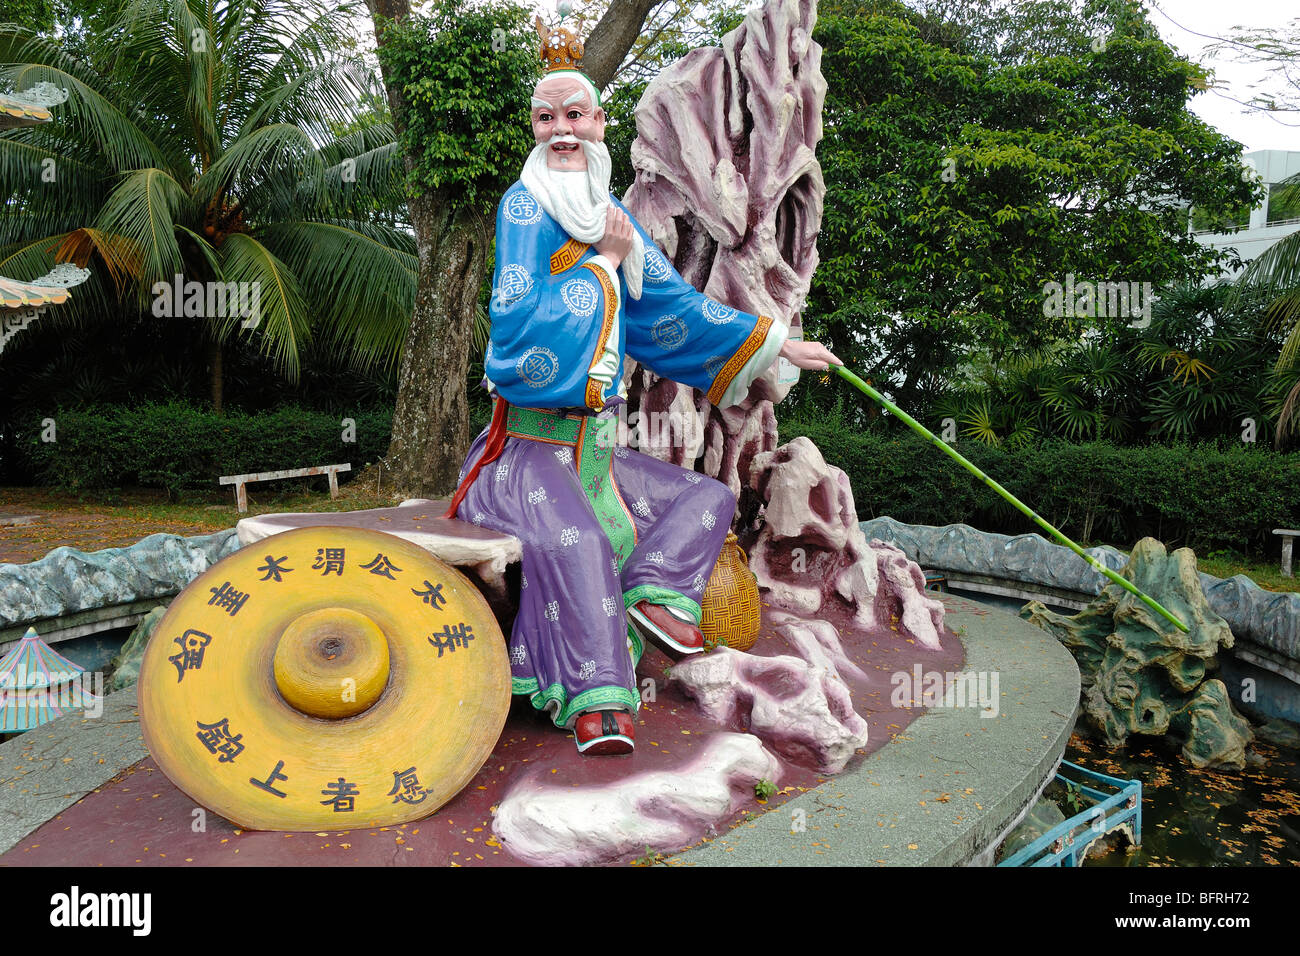 Jiang Ziya - Chinese Folkloric Character - Fishing, Tiger Balm Gardens Chinese Theme Park, Singapore Stock Photo